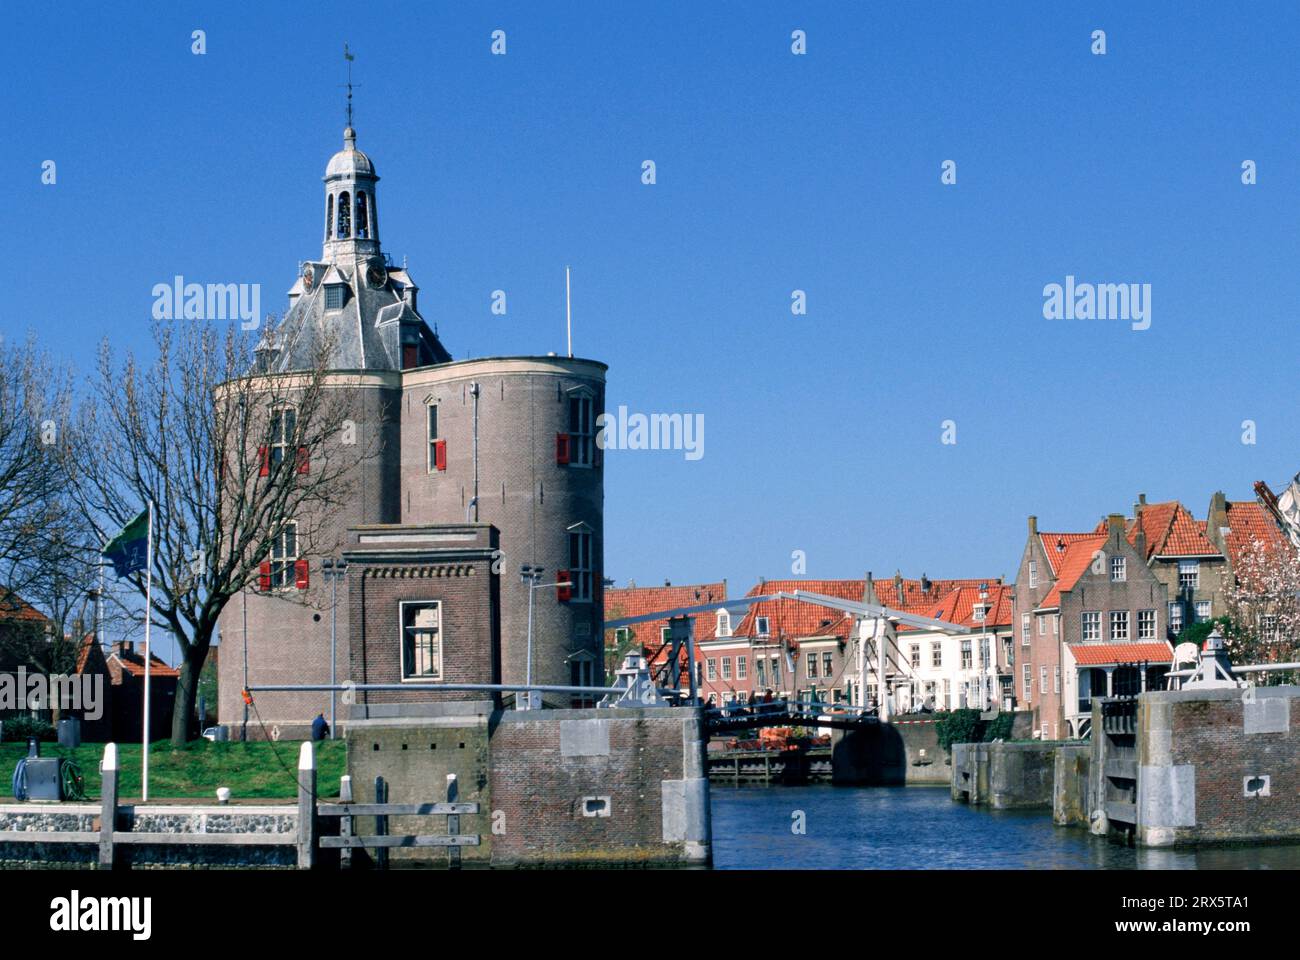 Dromedaris' defence tower and drawbridge, Enkhuizen, Netherlands Stock Photo